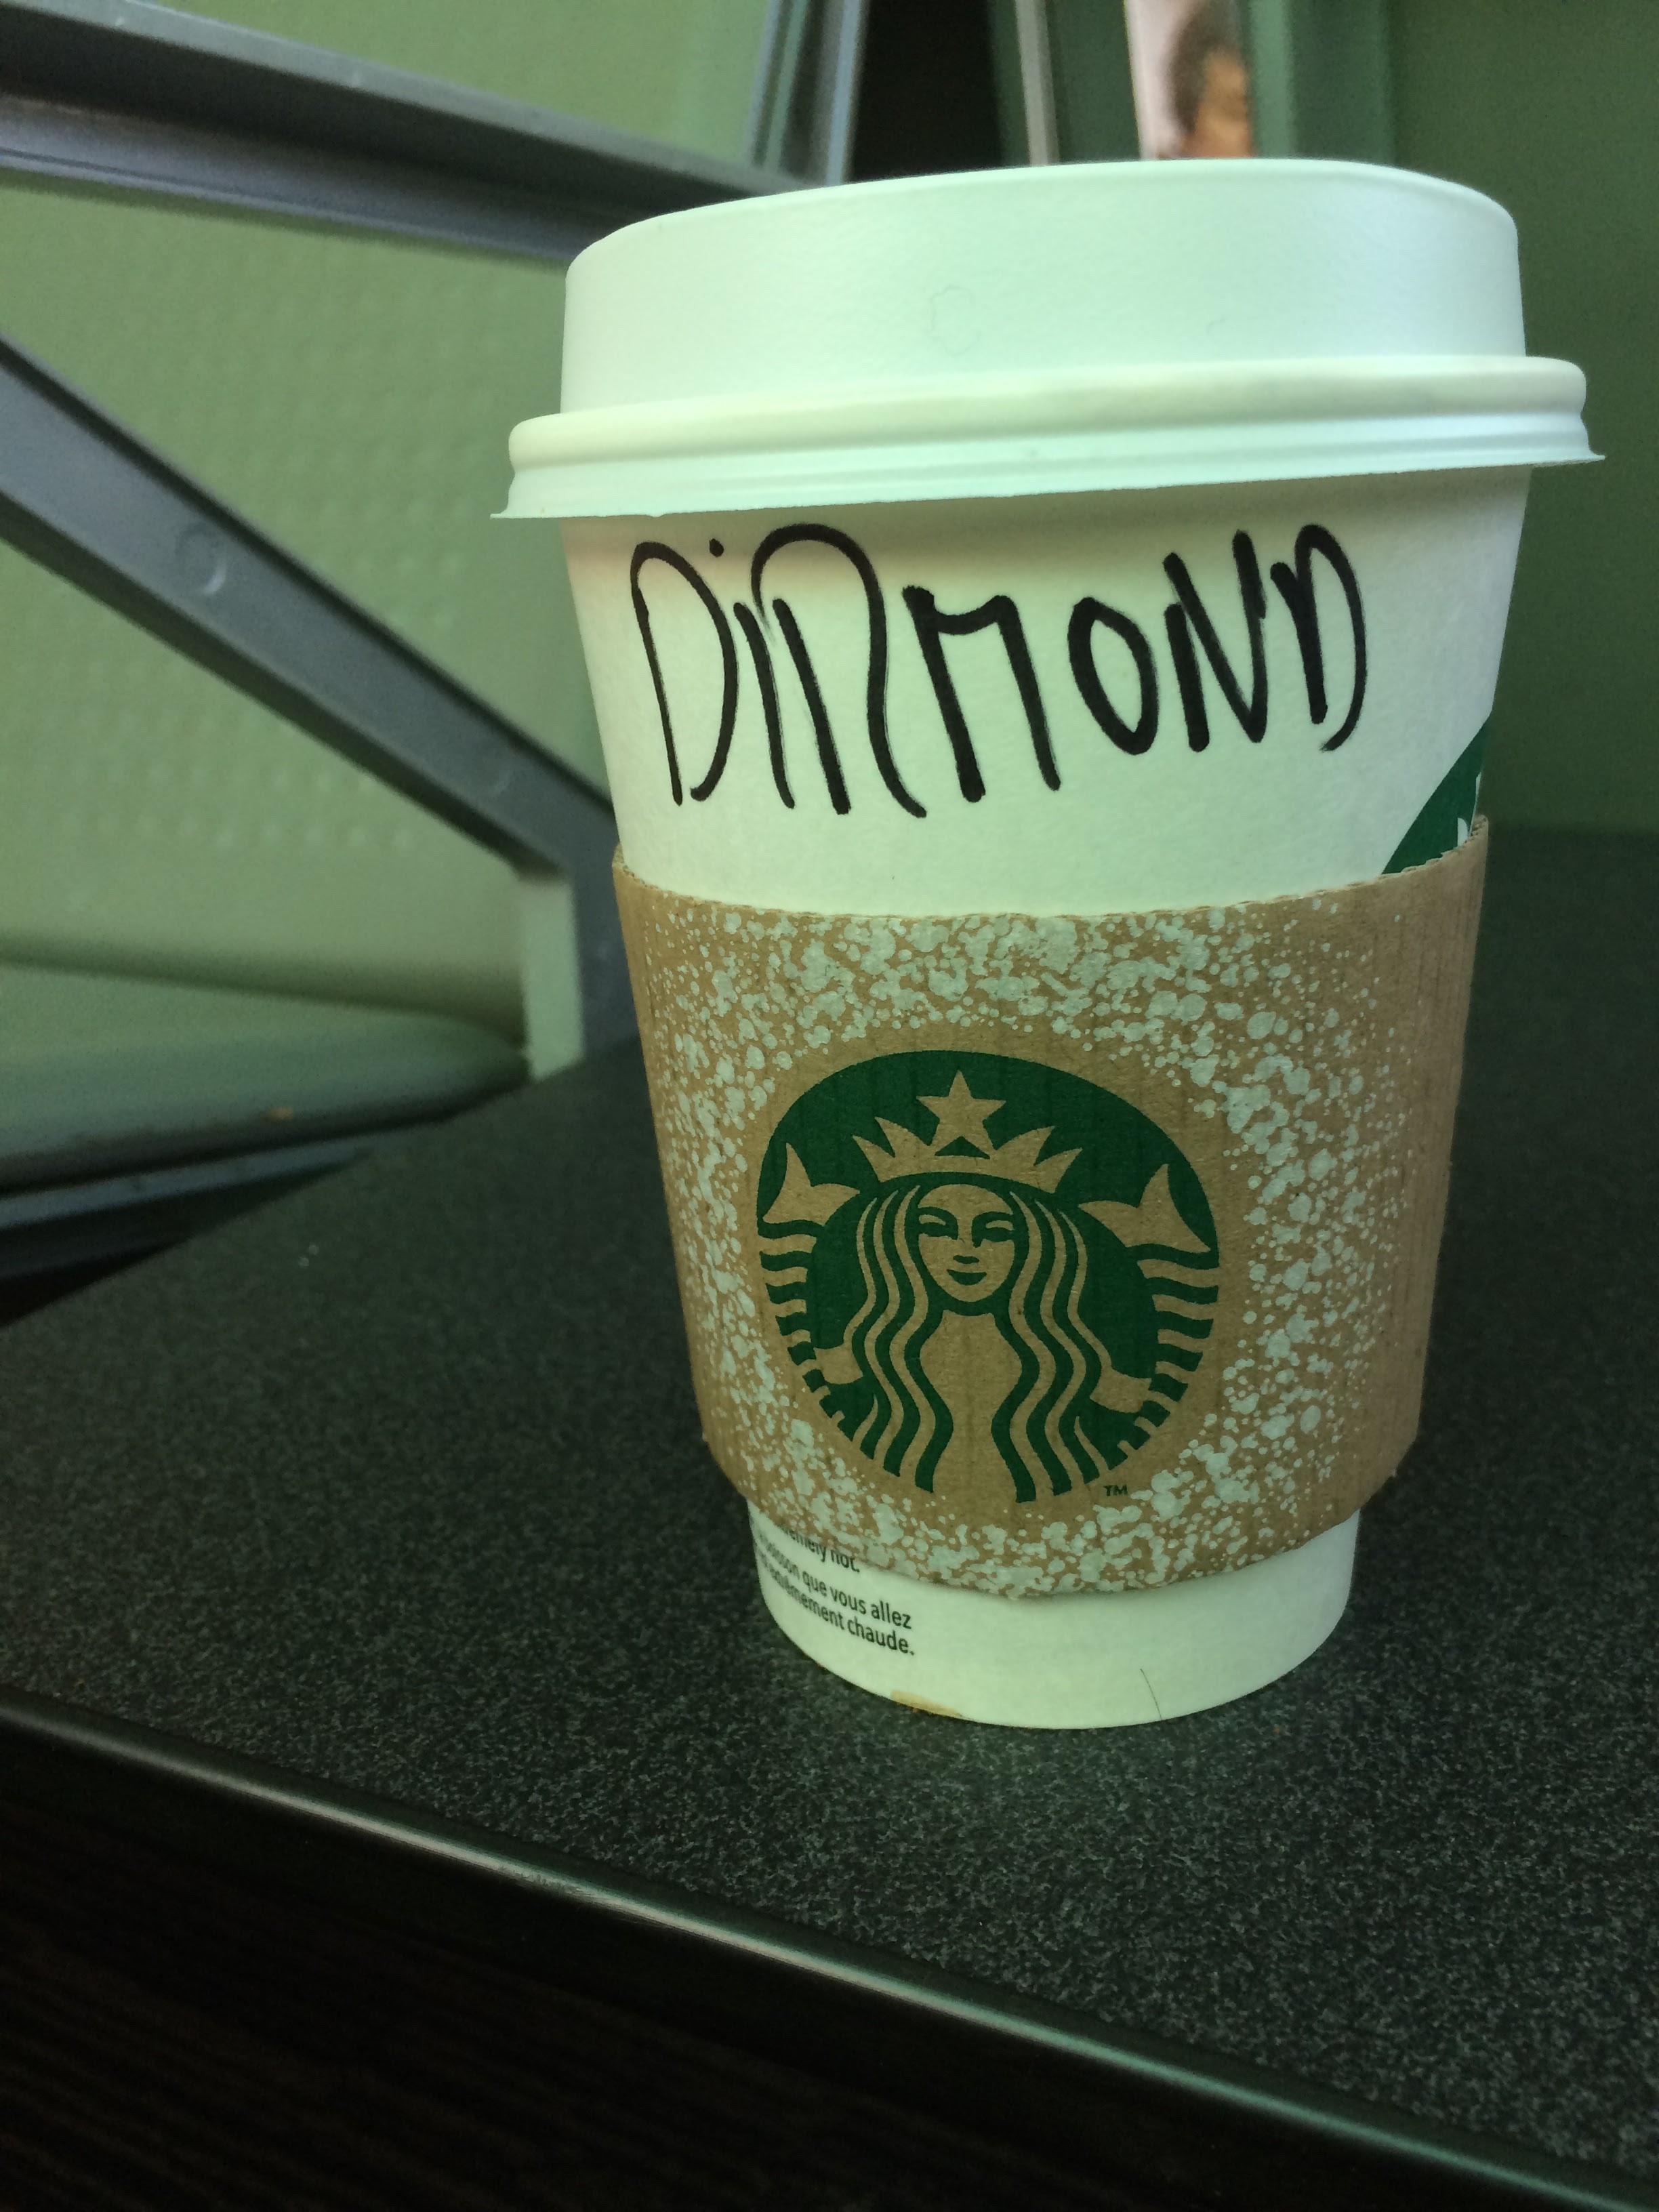 Diarmaid misspelled on a Starbucks cup